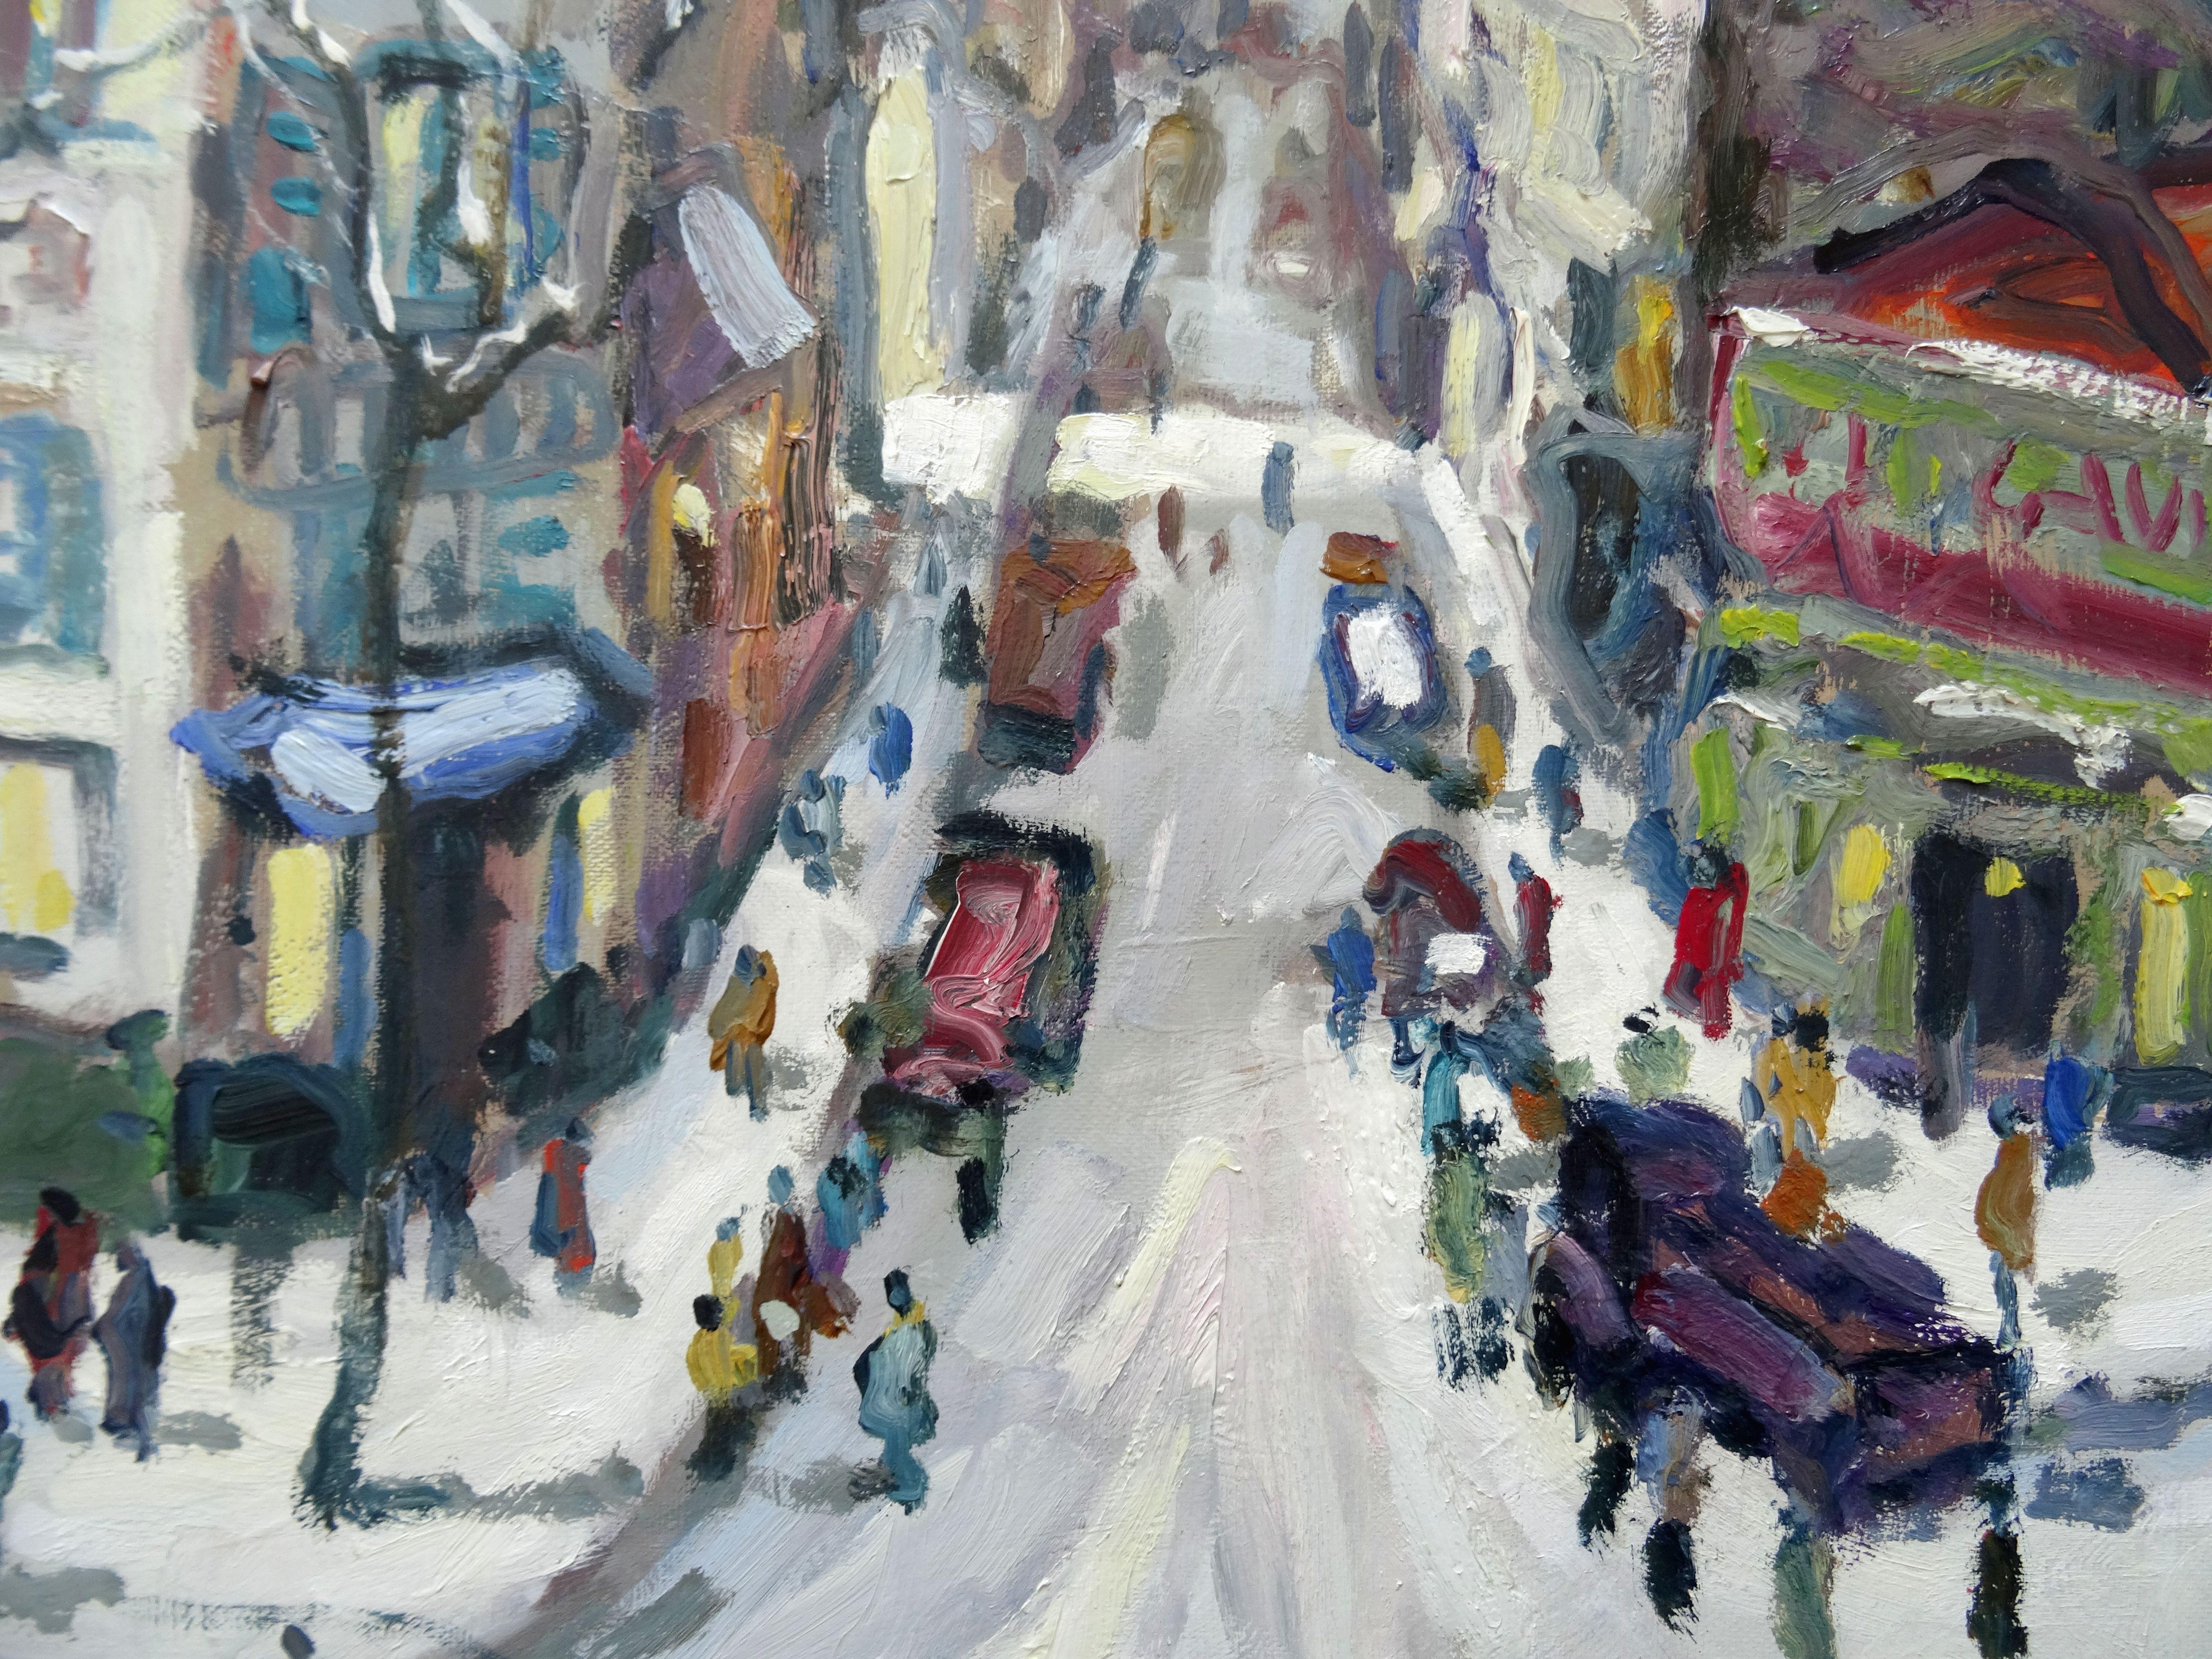 Entertainment rue Clisson in Paris. Oil on canvas, 54x65 cm
Paris Street at winter 
